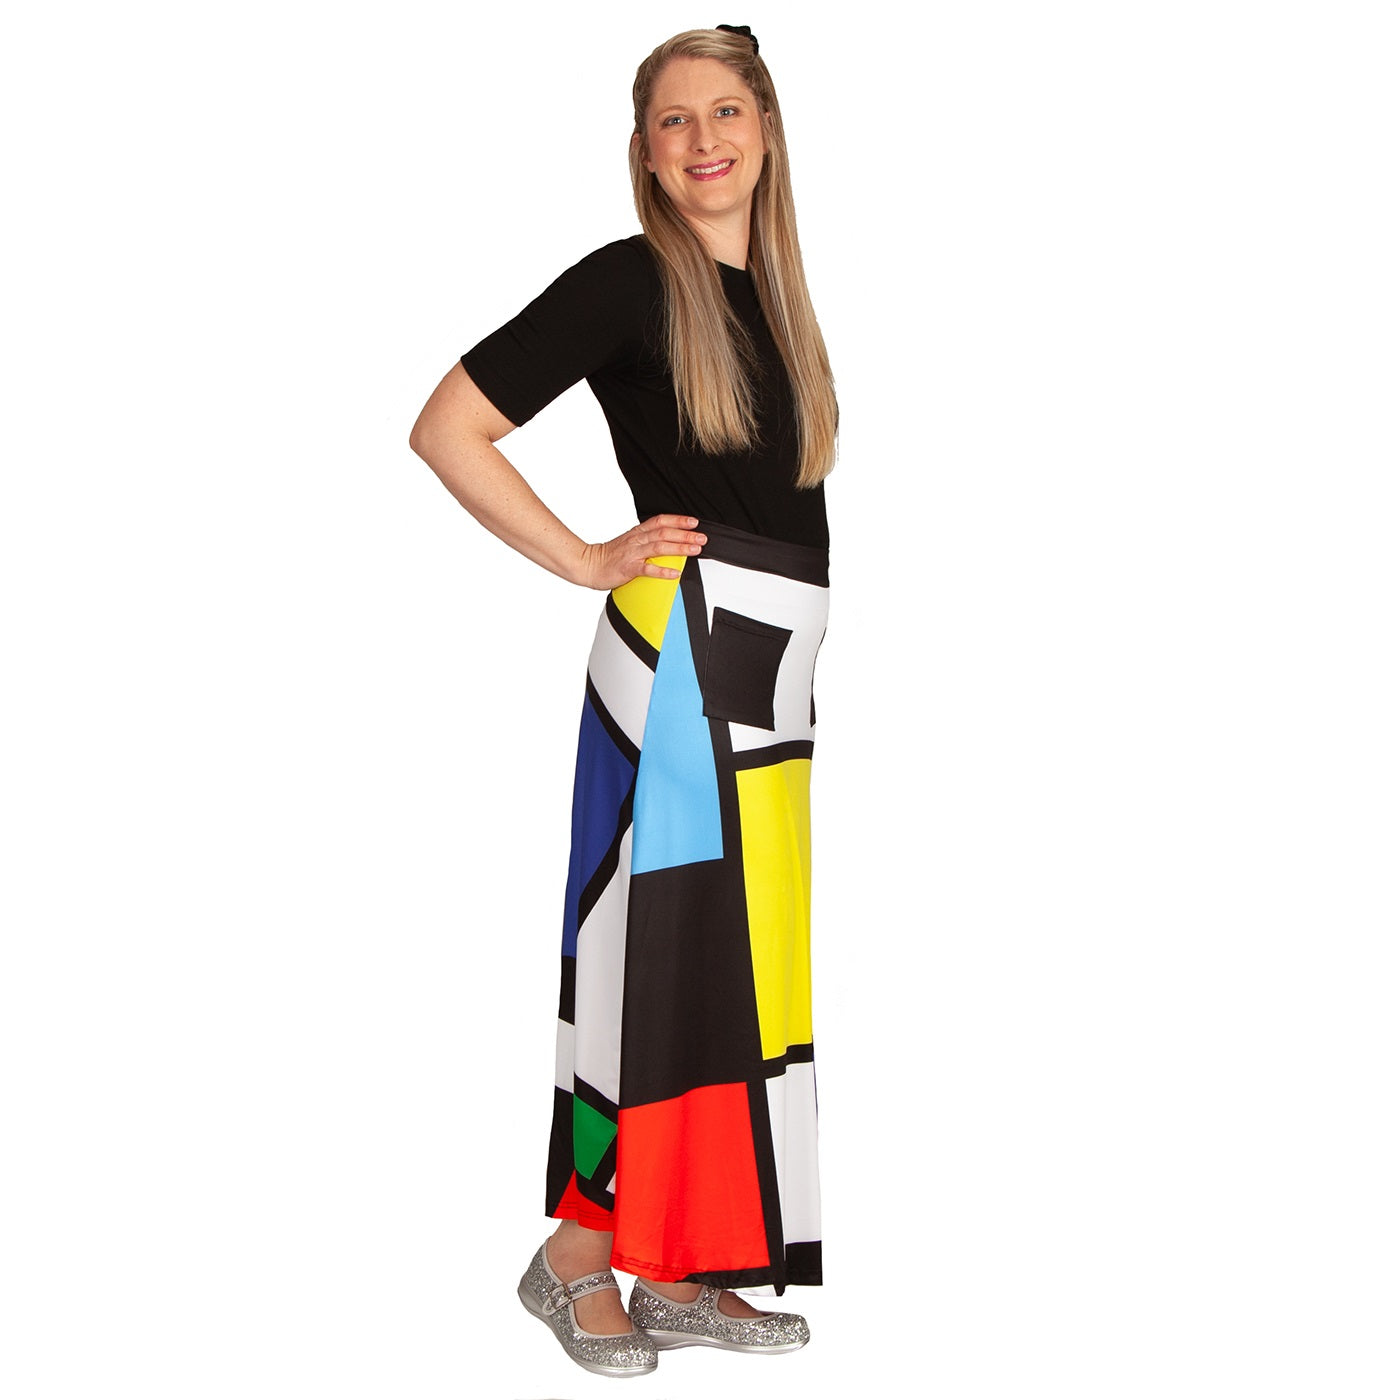 Intrigue Maxi Skirt by RainbowsAndFairies.com.au (Black Cats - Mondrian Art - Check Print - Skirt With Pockets - Boho - Mod Retro - Vintage Inspired) - SKU: CL_MAXIS_INTRG_ORG - Pic-05